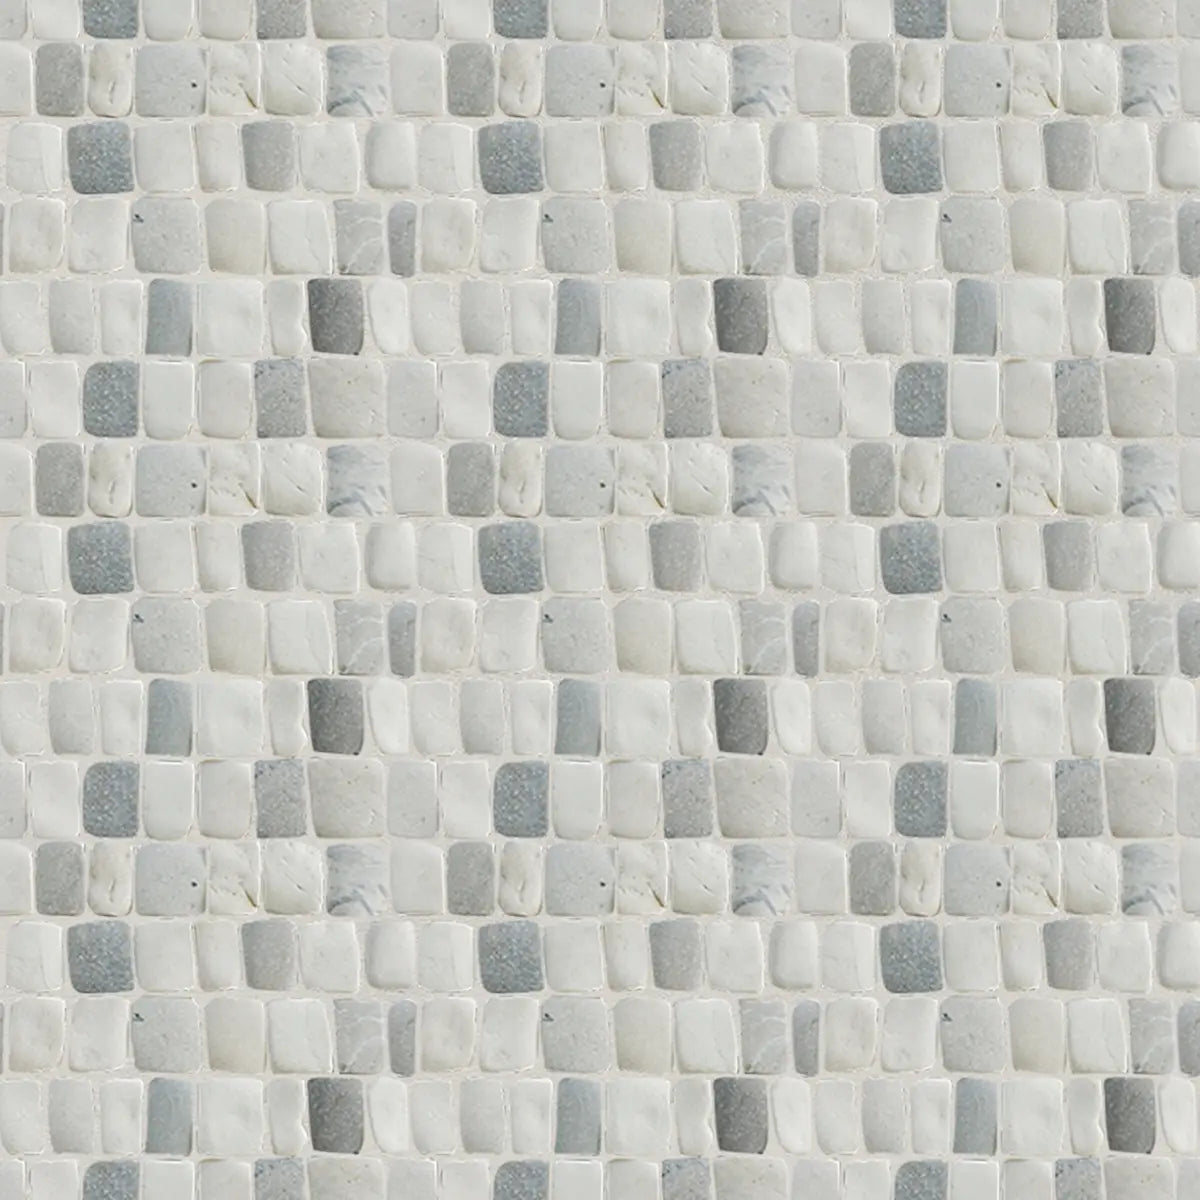 Cloud Stone Mosaic Tile, Canine Natural Stone Tile